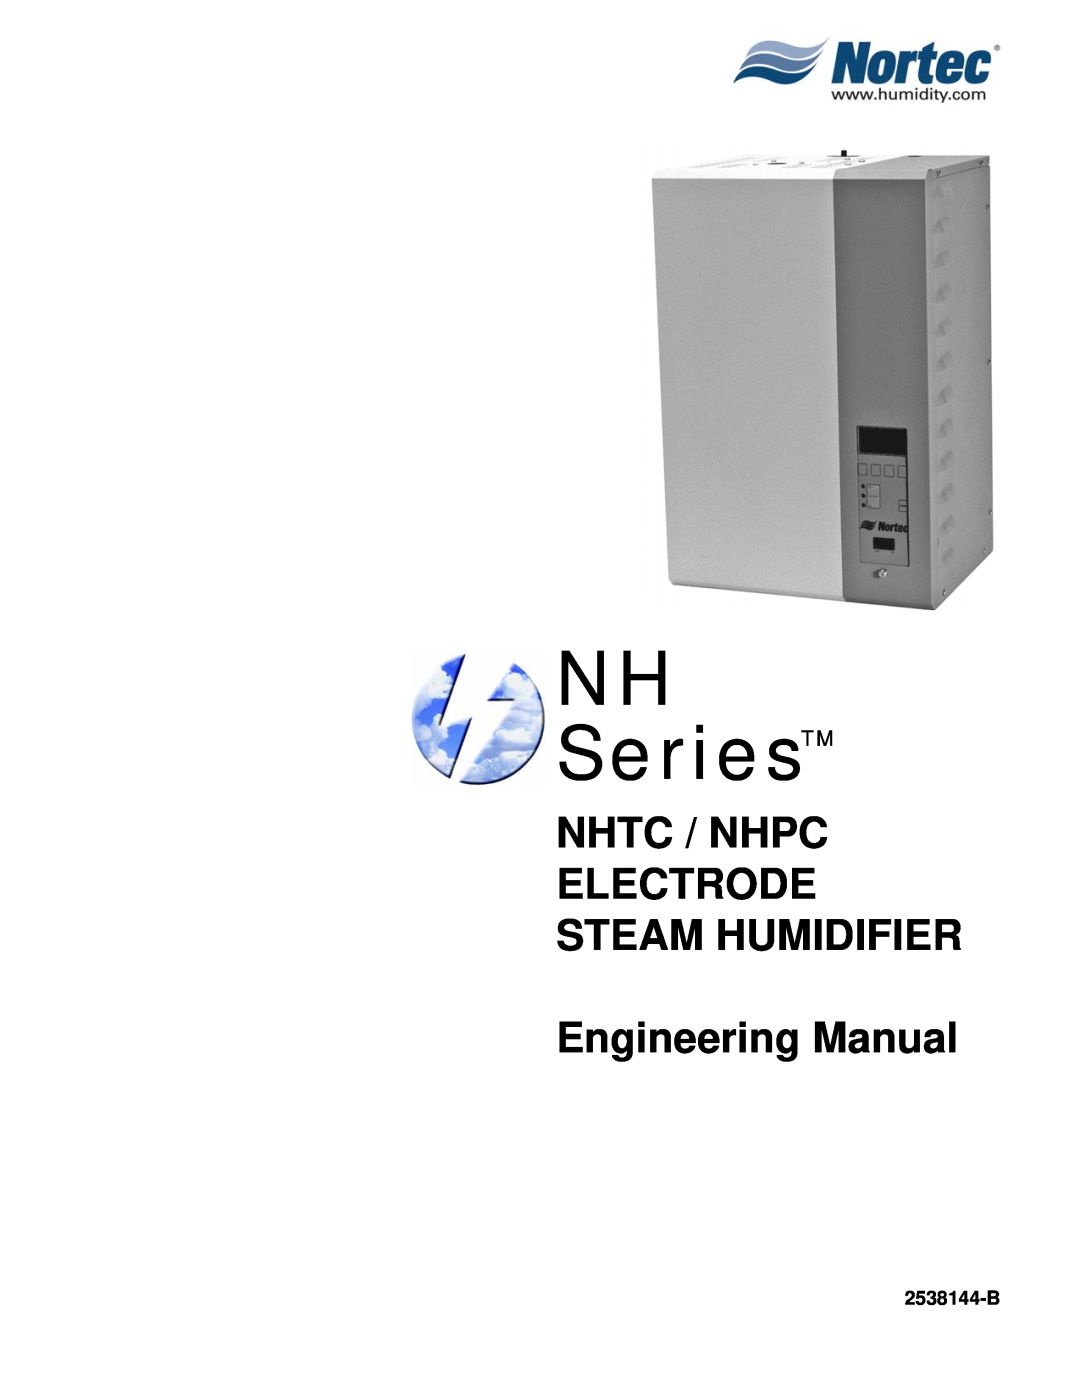 Nortec NHTC, NHPC manual NH SeriesTM, Nhtc / Nhpc Electrode Steam Humidifier, Engineering Manual, 2538144-B 